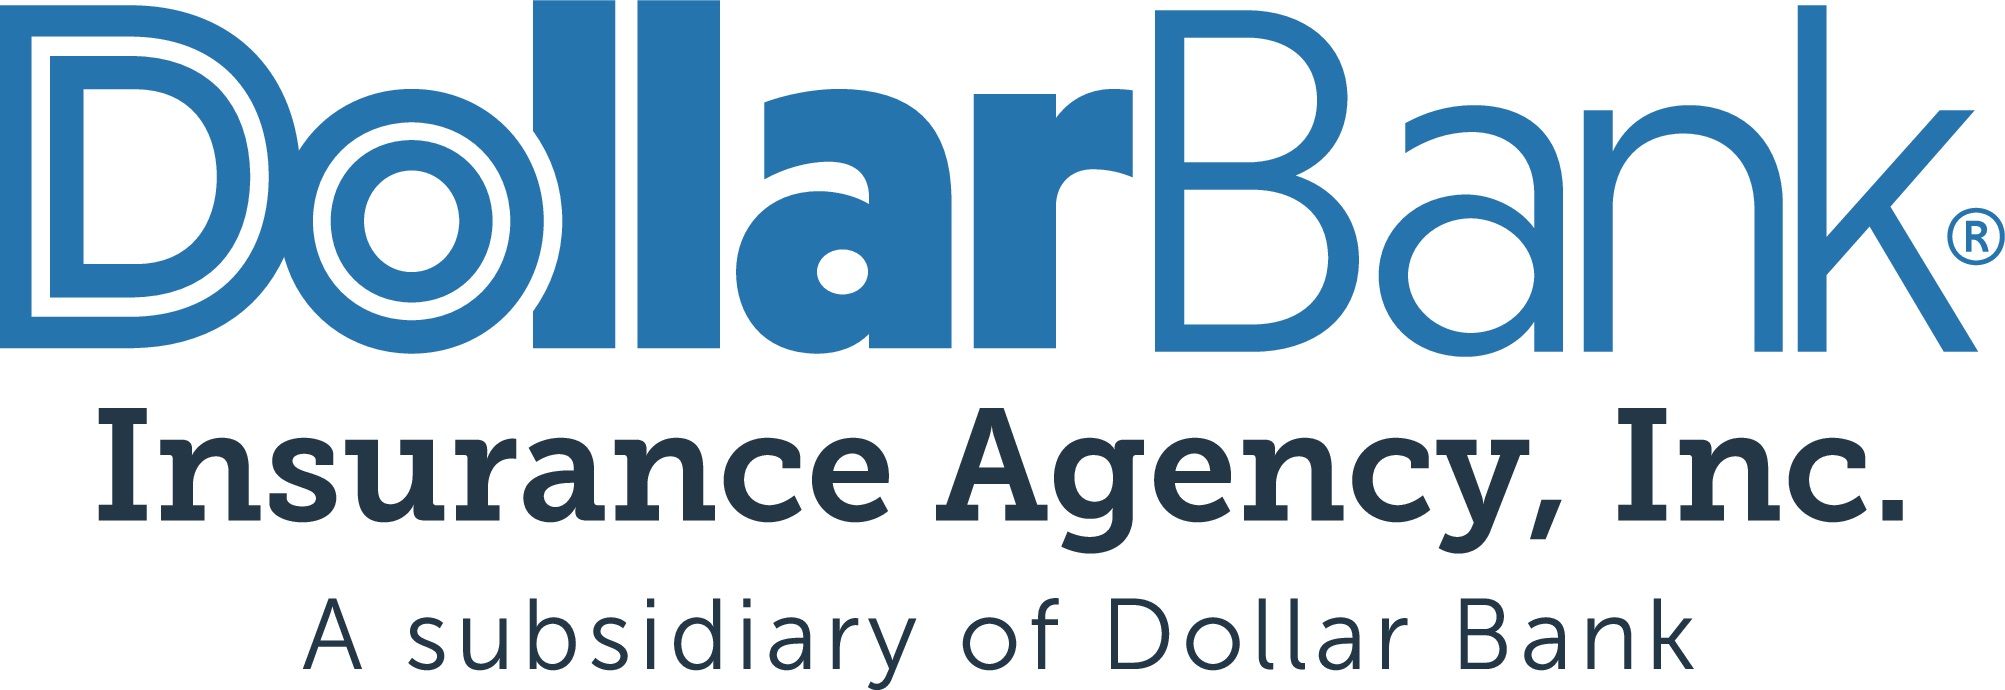 Dollar Bank Insurance Agency